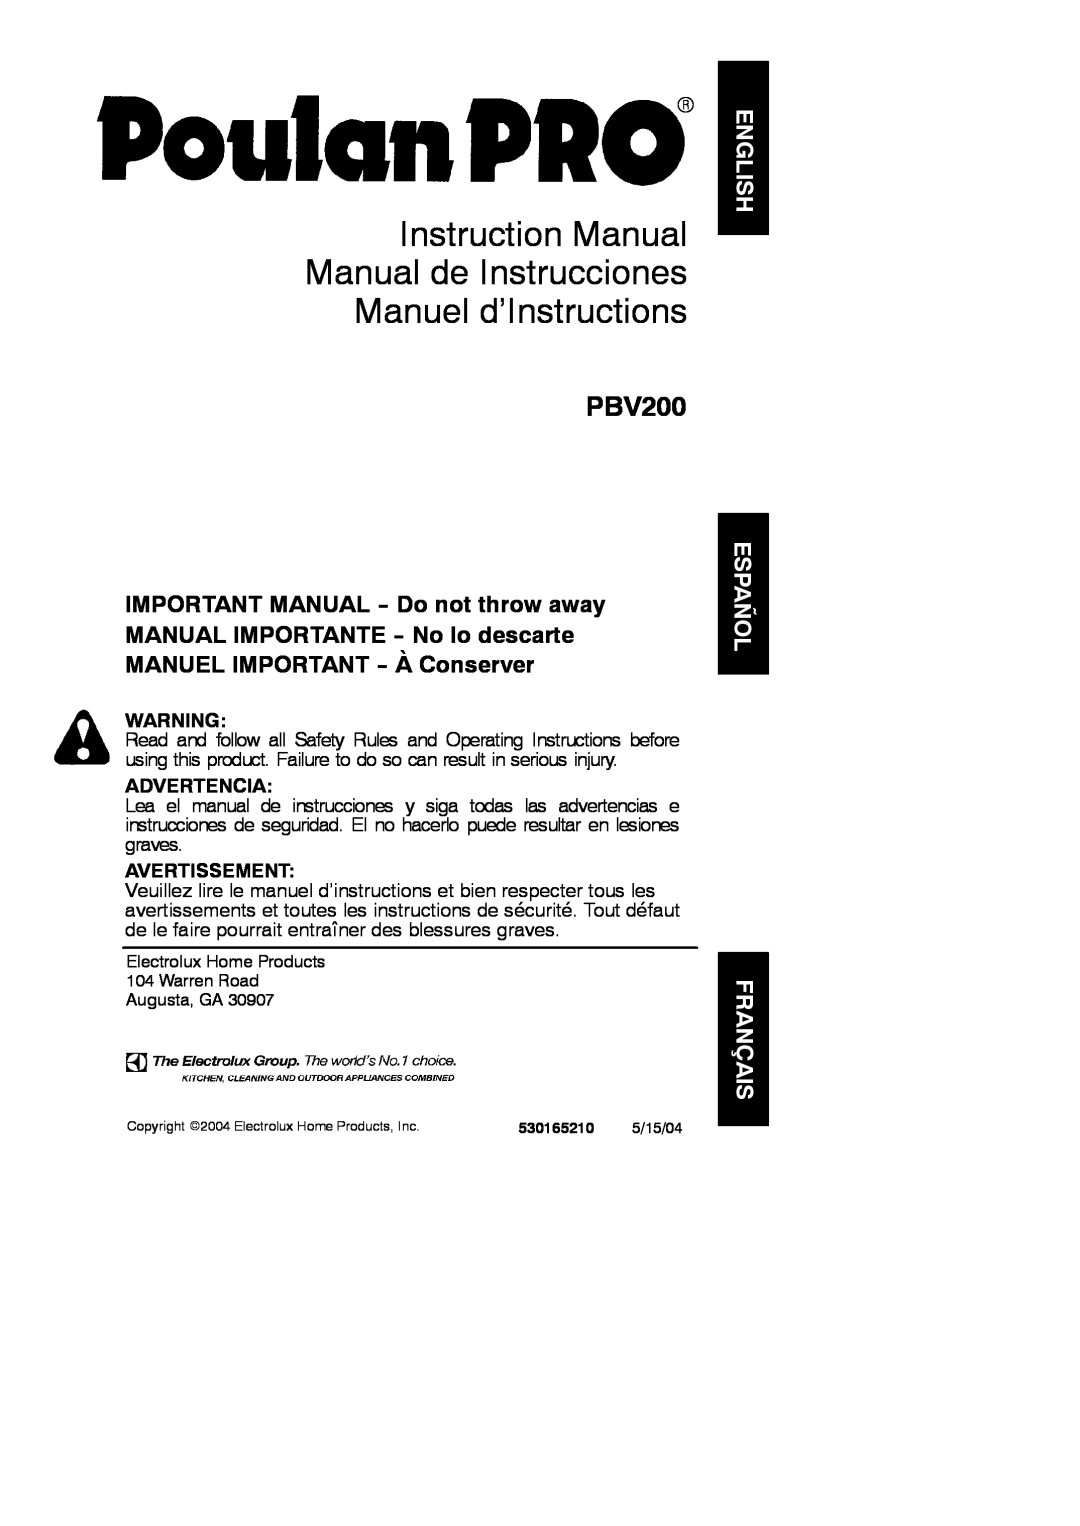 Poulan PBV200 instruction manual English, Español Français, Advertencia, Avertissement 